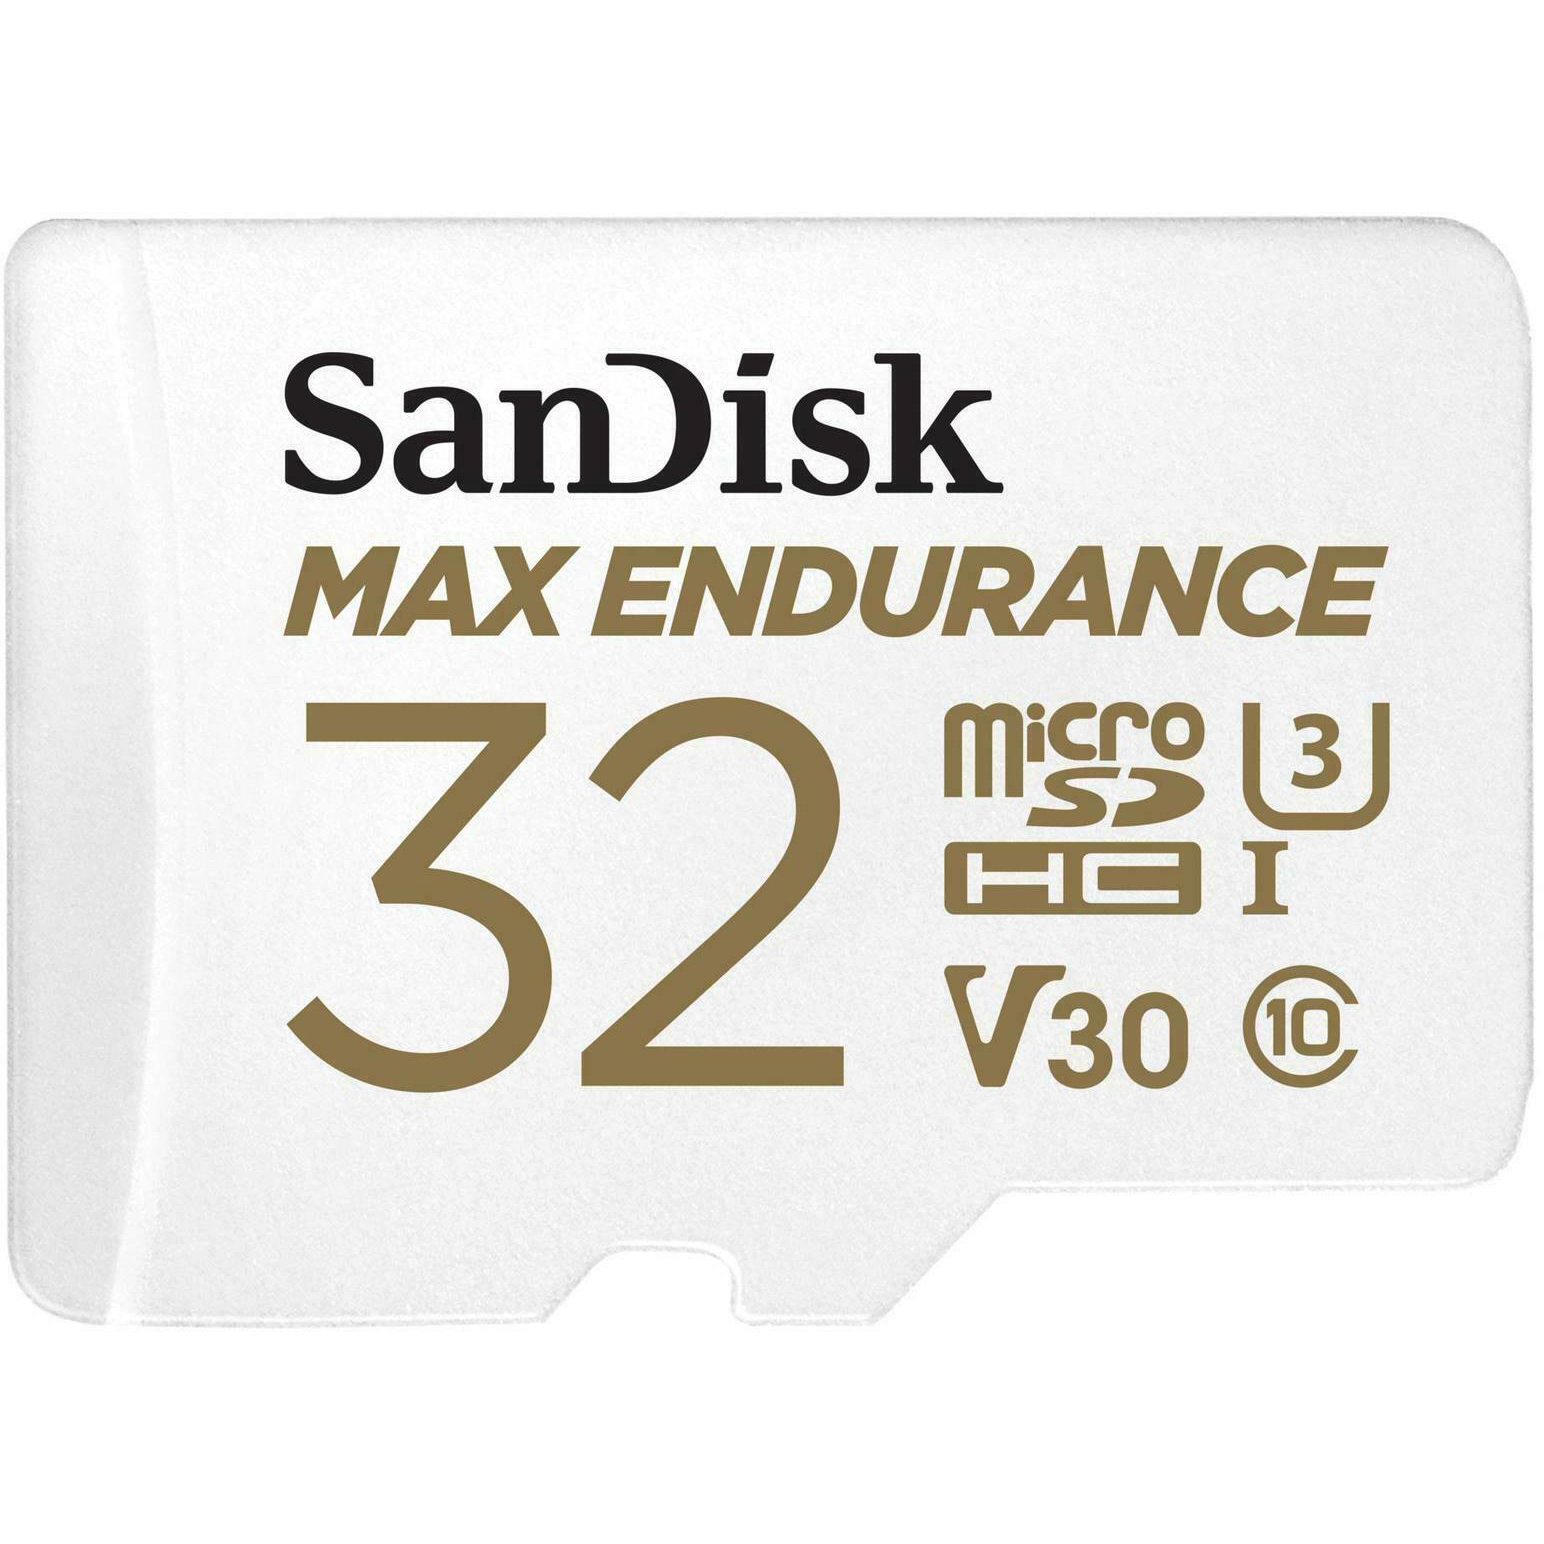 Original SanDisk Max Endurance 32GB Class 3 MicroSDHC Memory Card (SDSQQVR-032G-GN6)